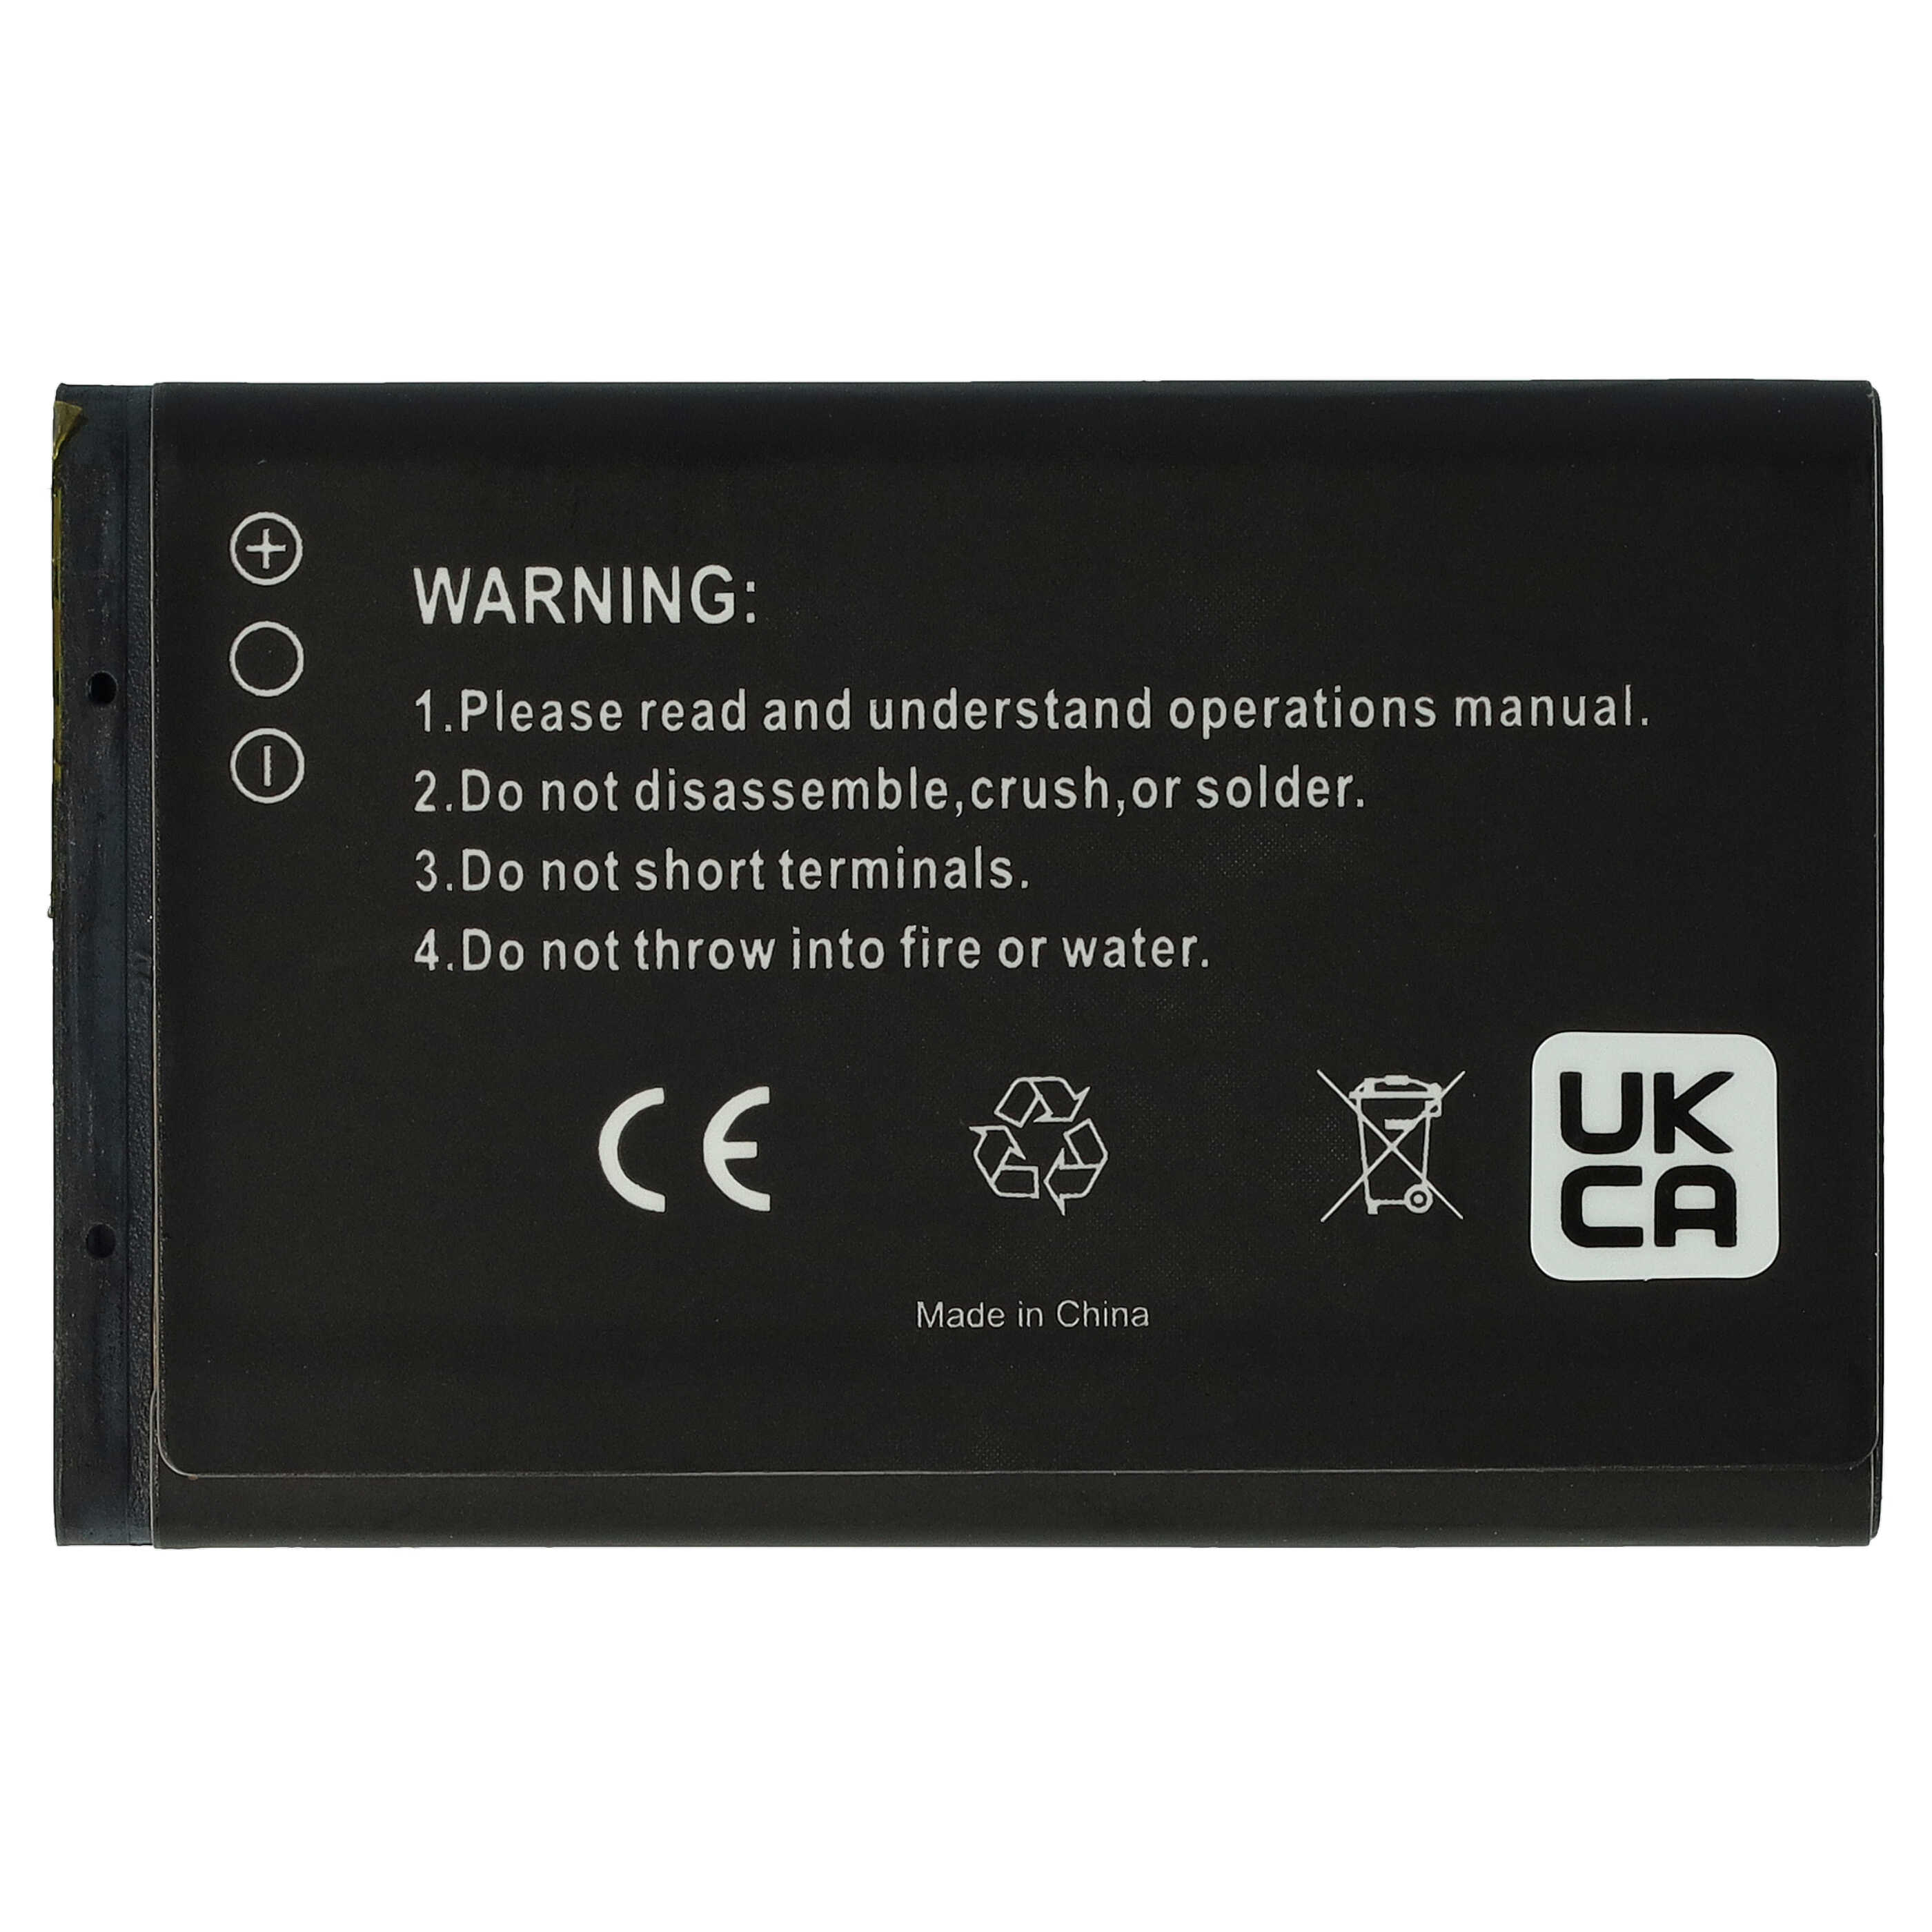 Akumulator do kamery cyfrowej / wideo zamiennik Aiptek 055 - 700 mAh 3,7 V Li-Ion